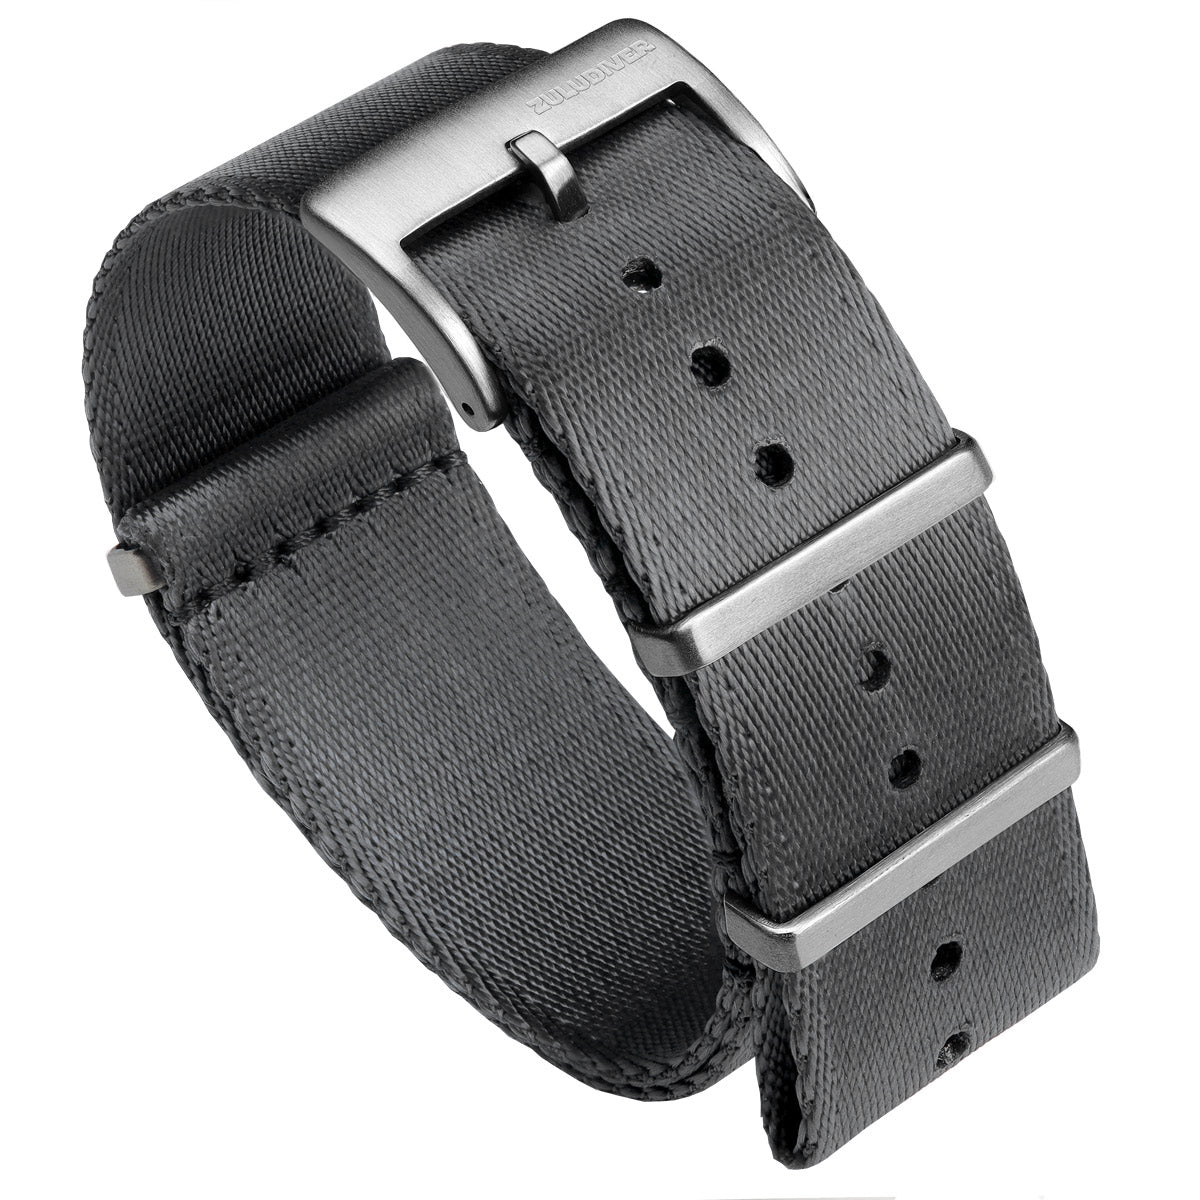 Premium Grey nylon NATO watch straps, seat belt nylon material, white background image